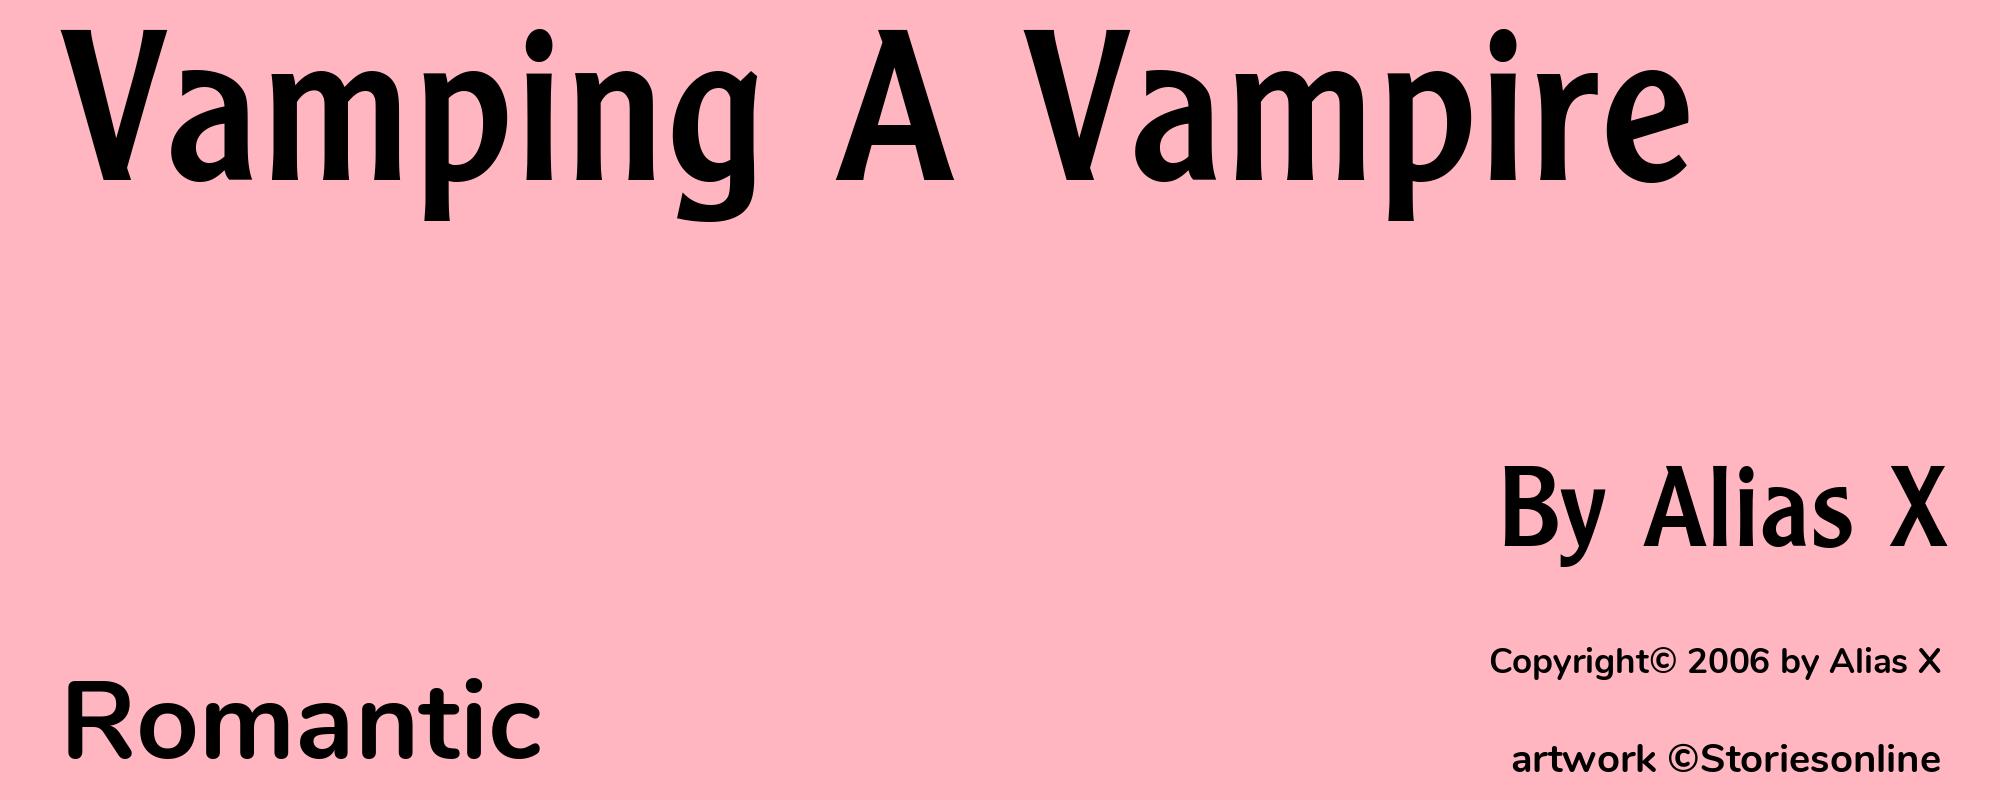 Vamping A Vampire - Cover